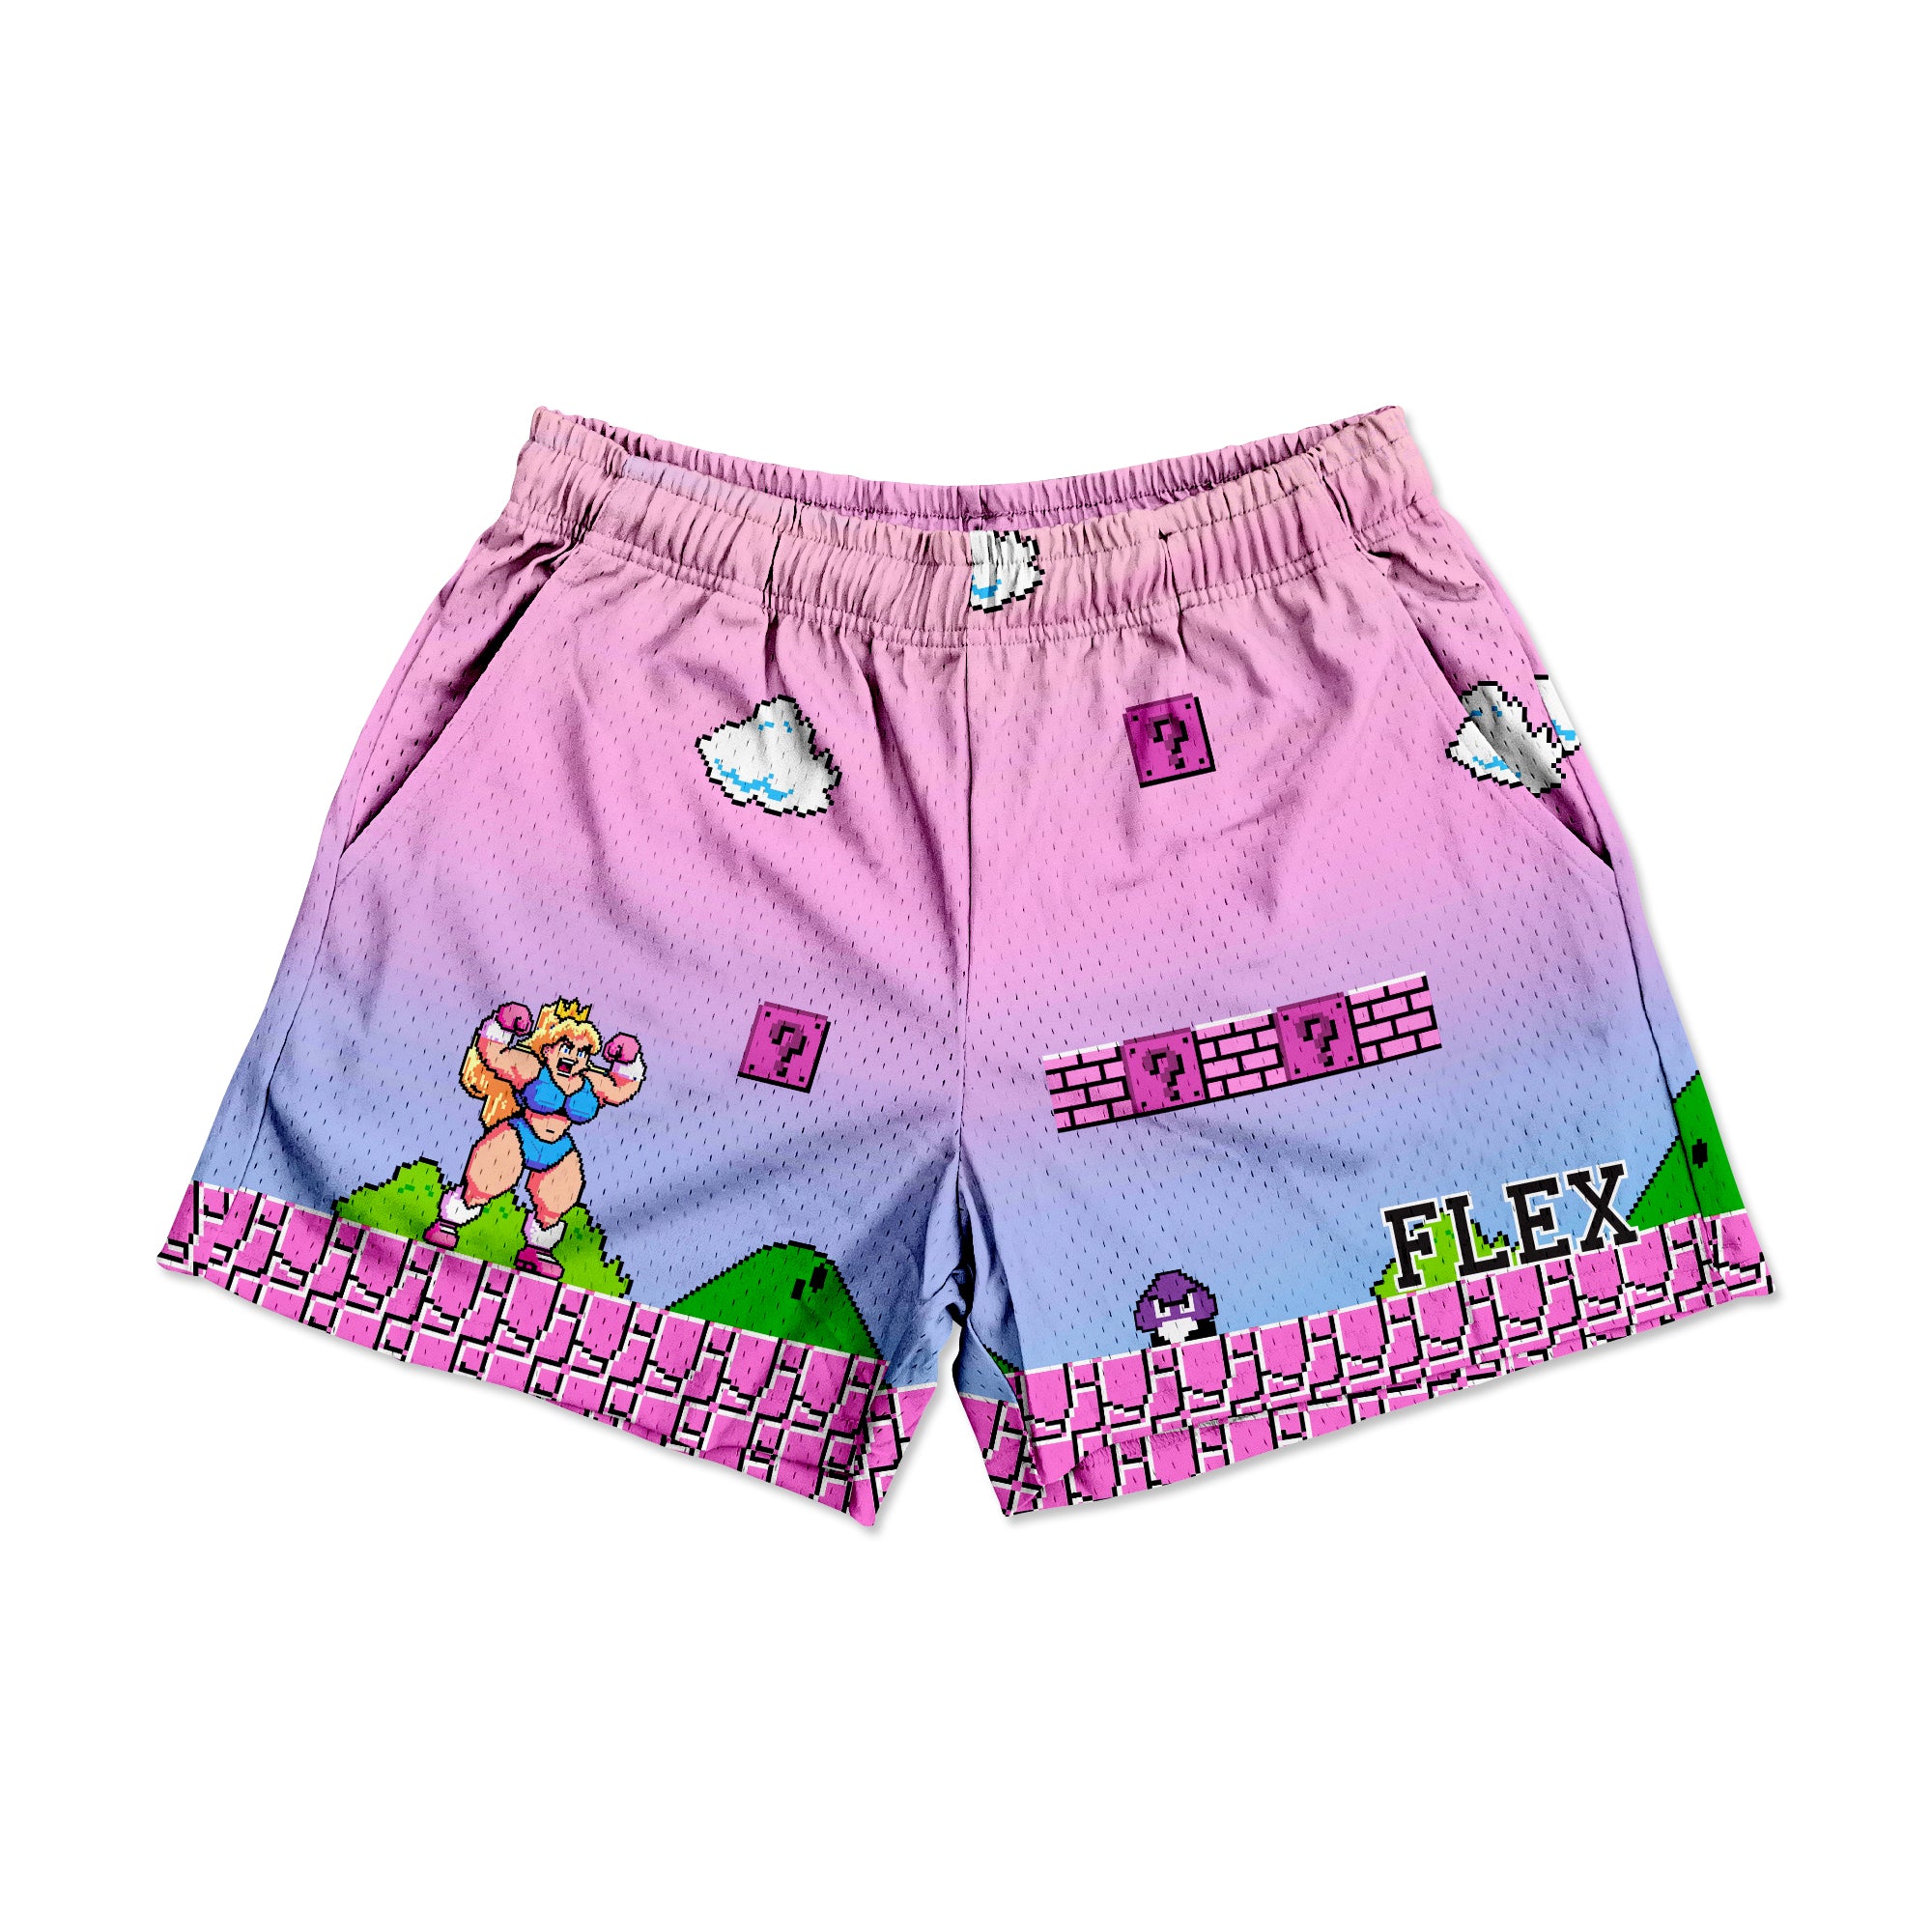 Mesh Flex Shorts 5